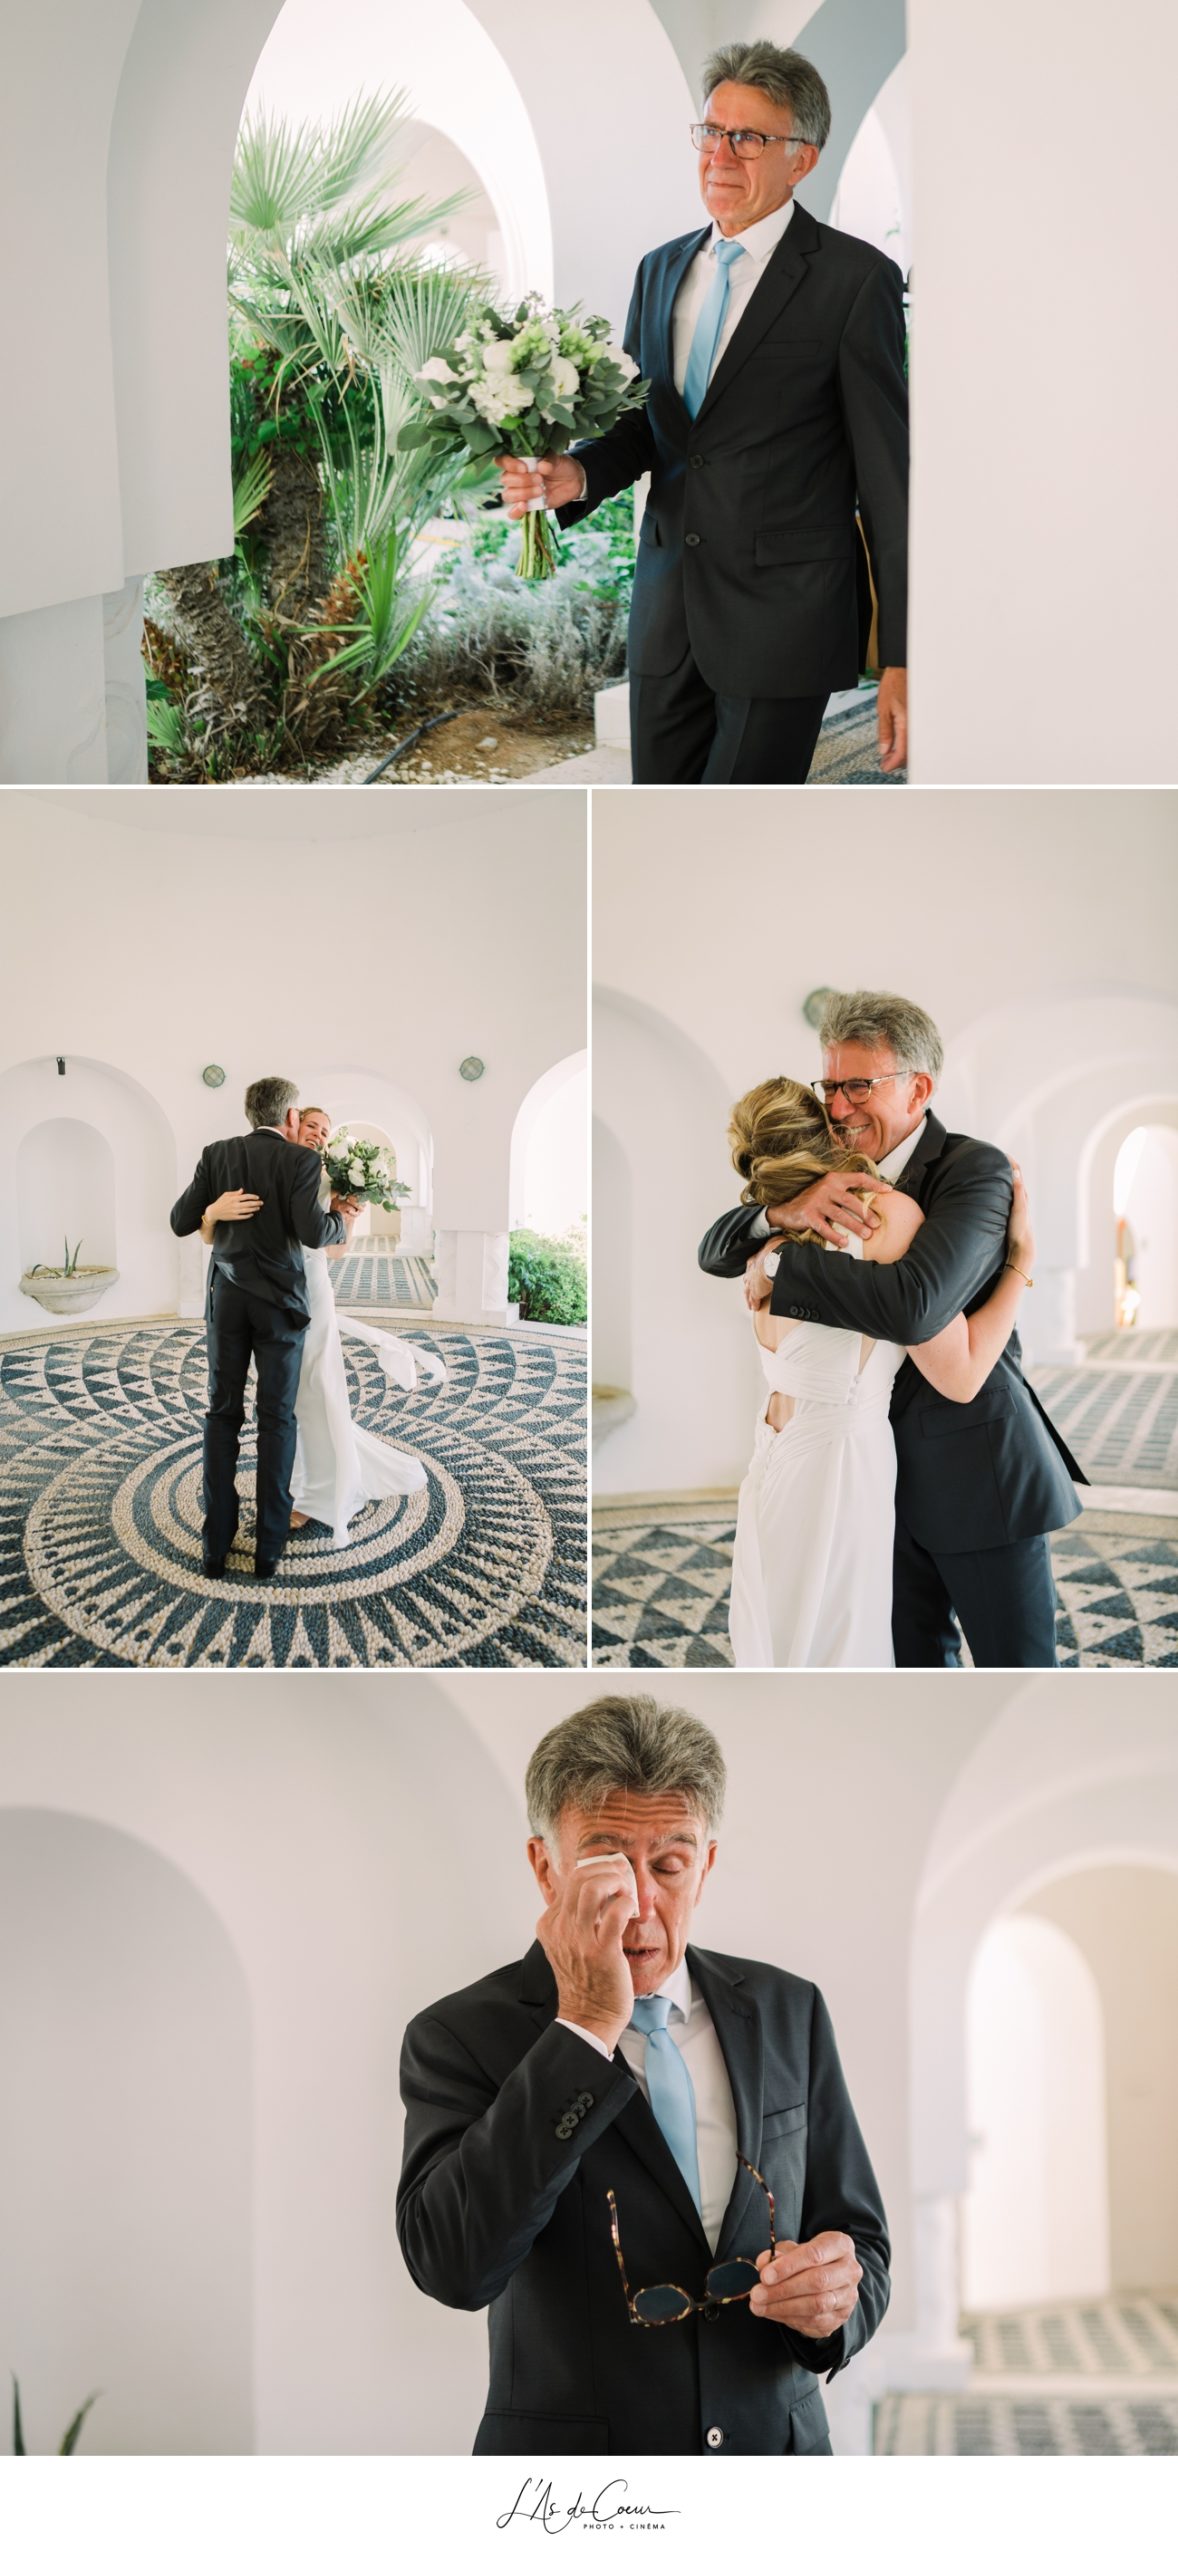 Photographe mariage grece - wedding photographer greece découverte de la mariée 